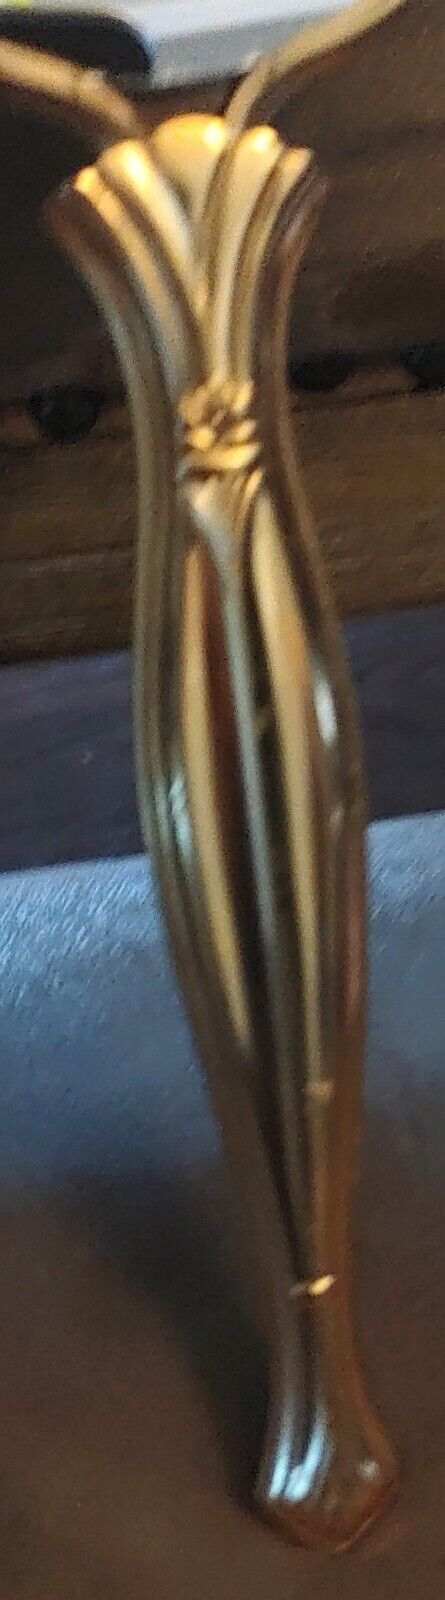 Vintage Gold Tone Hand Held Mirror W/Floral Imprints On Back $12